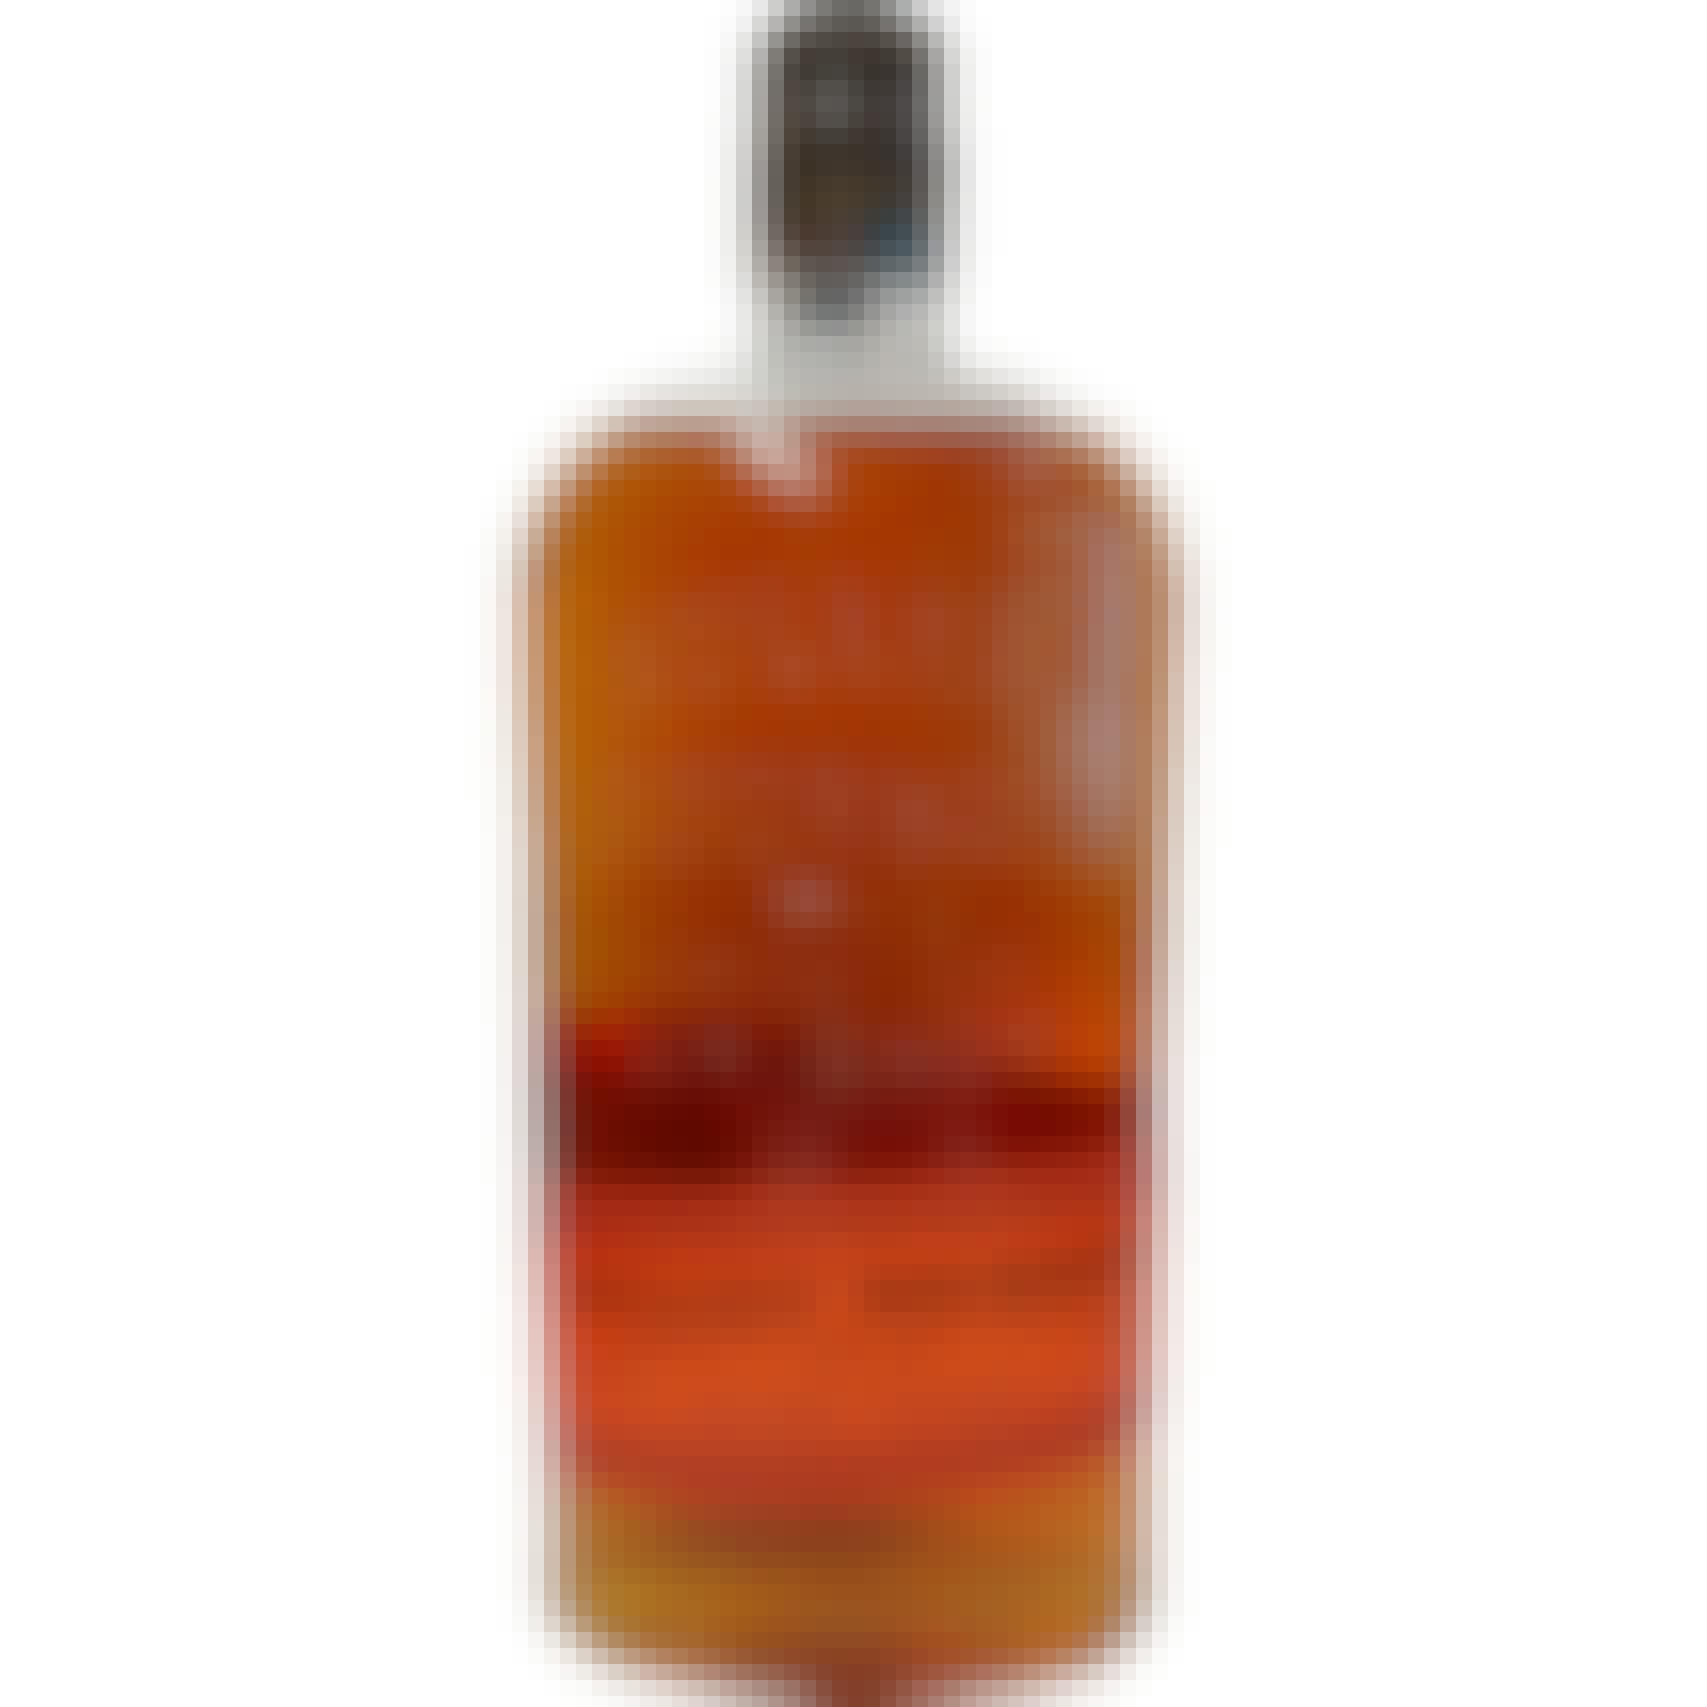 Bulleit Frontier Bourbon Whiskey 750ml